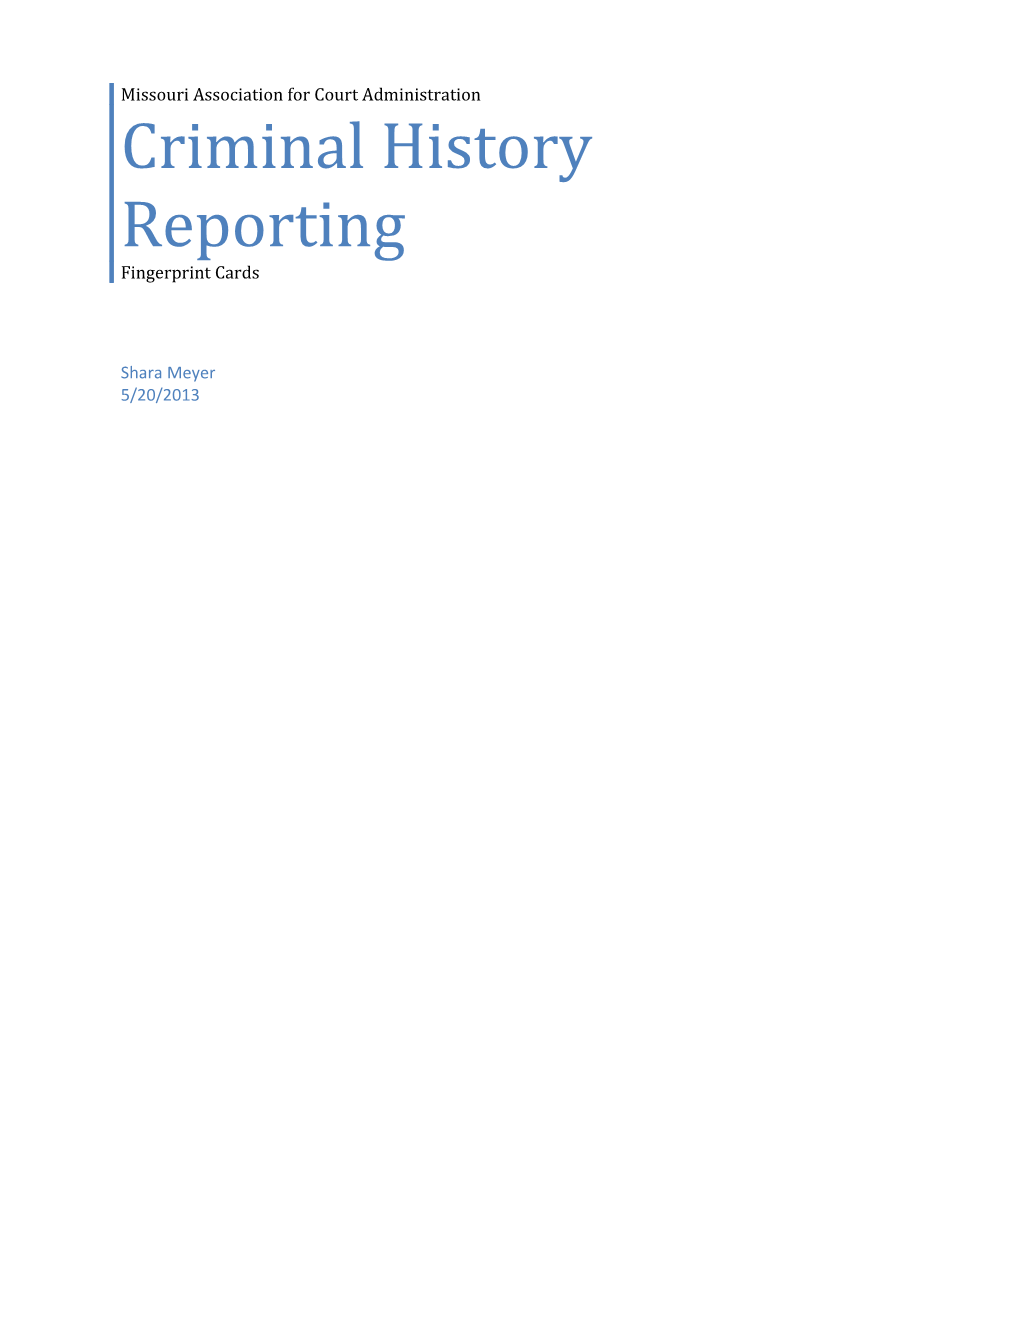 Criminal History Reporting